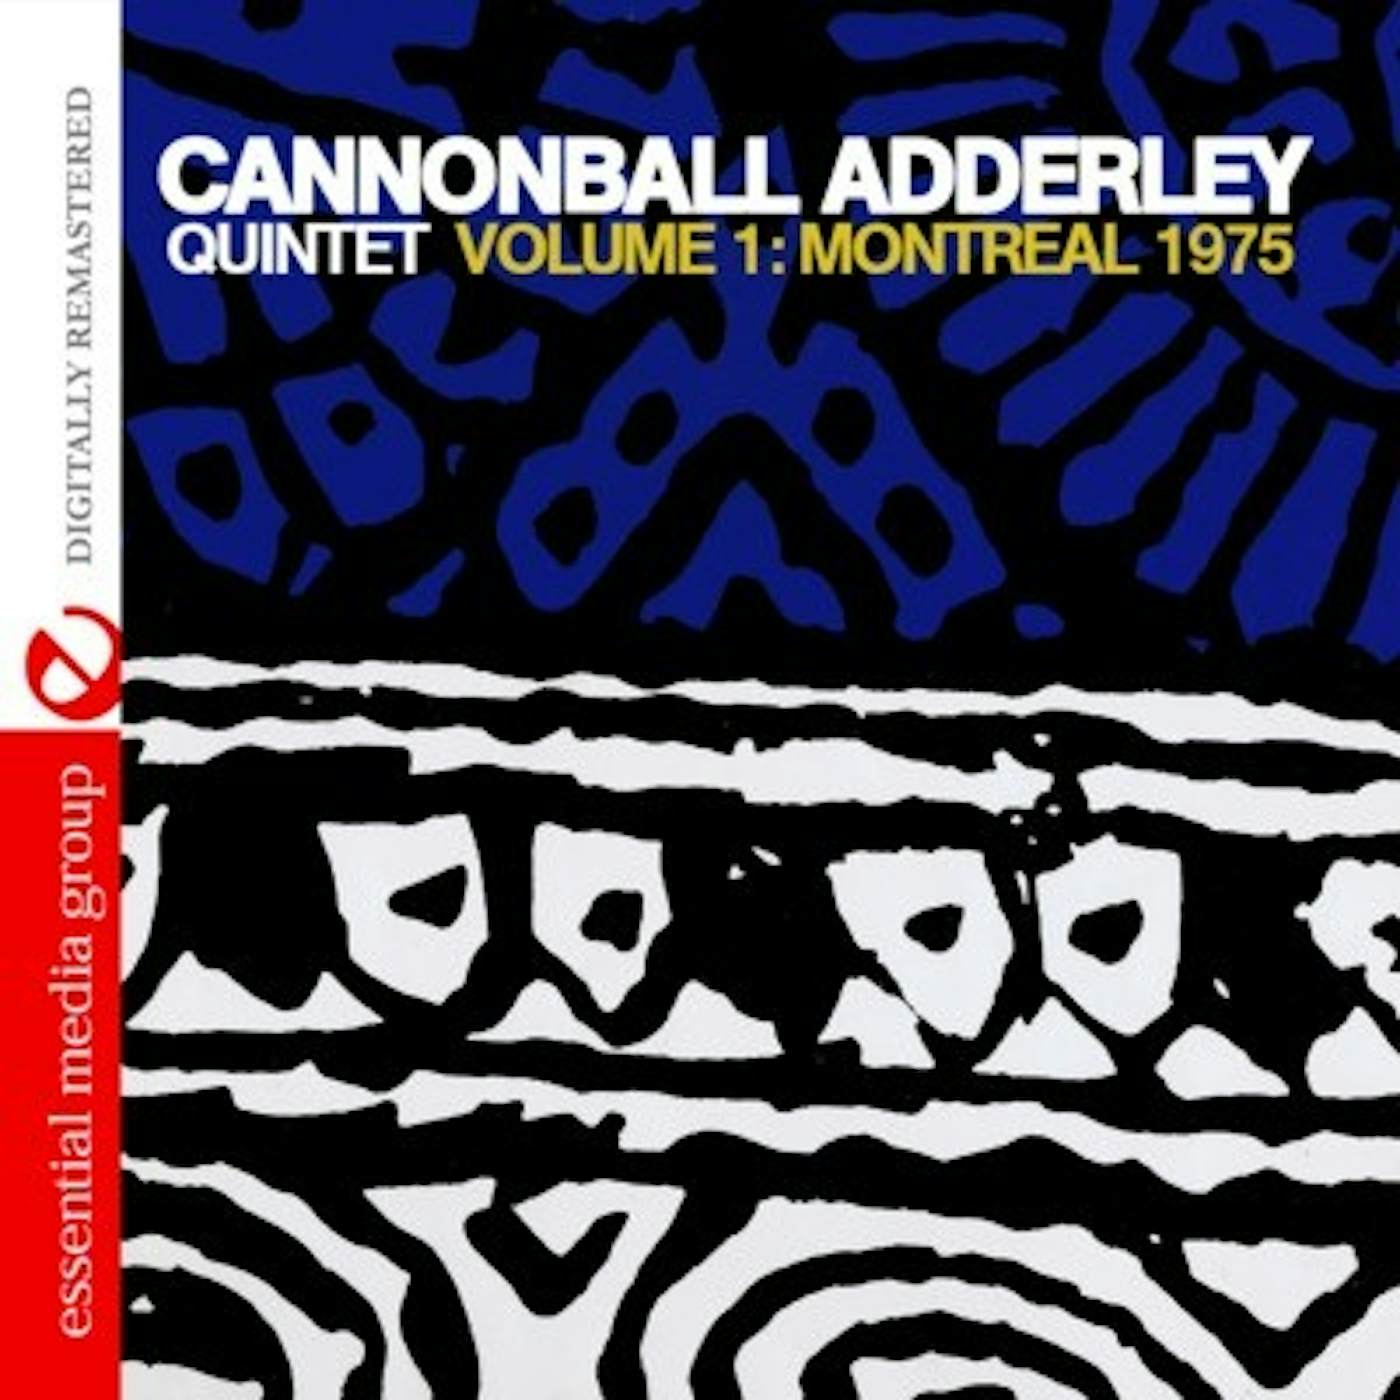 Cannonball Adderley VOLUME 1: MONTREAL 1975 CD